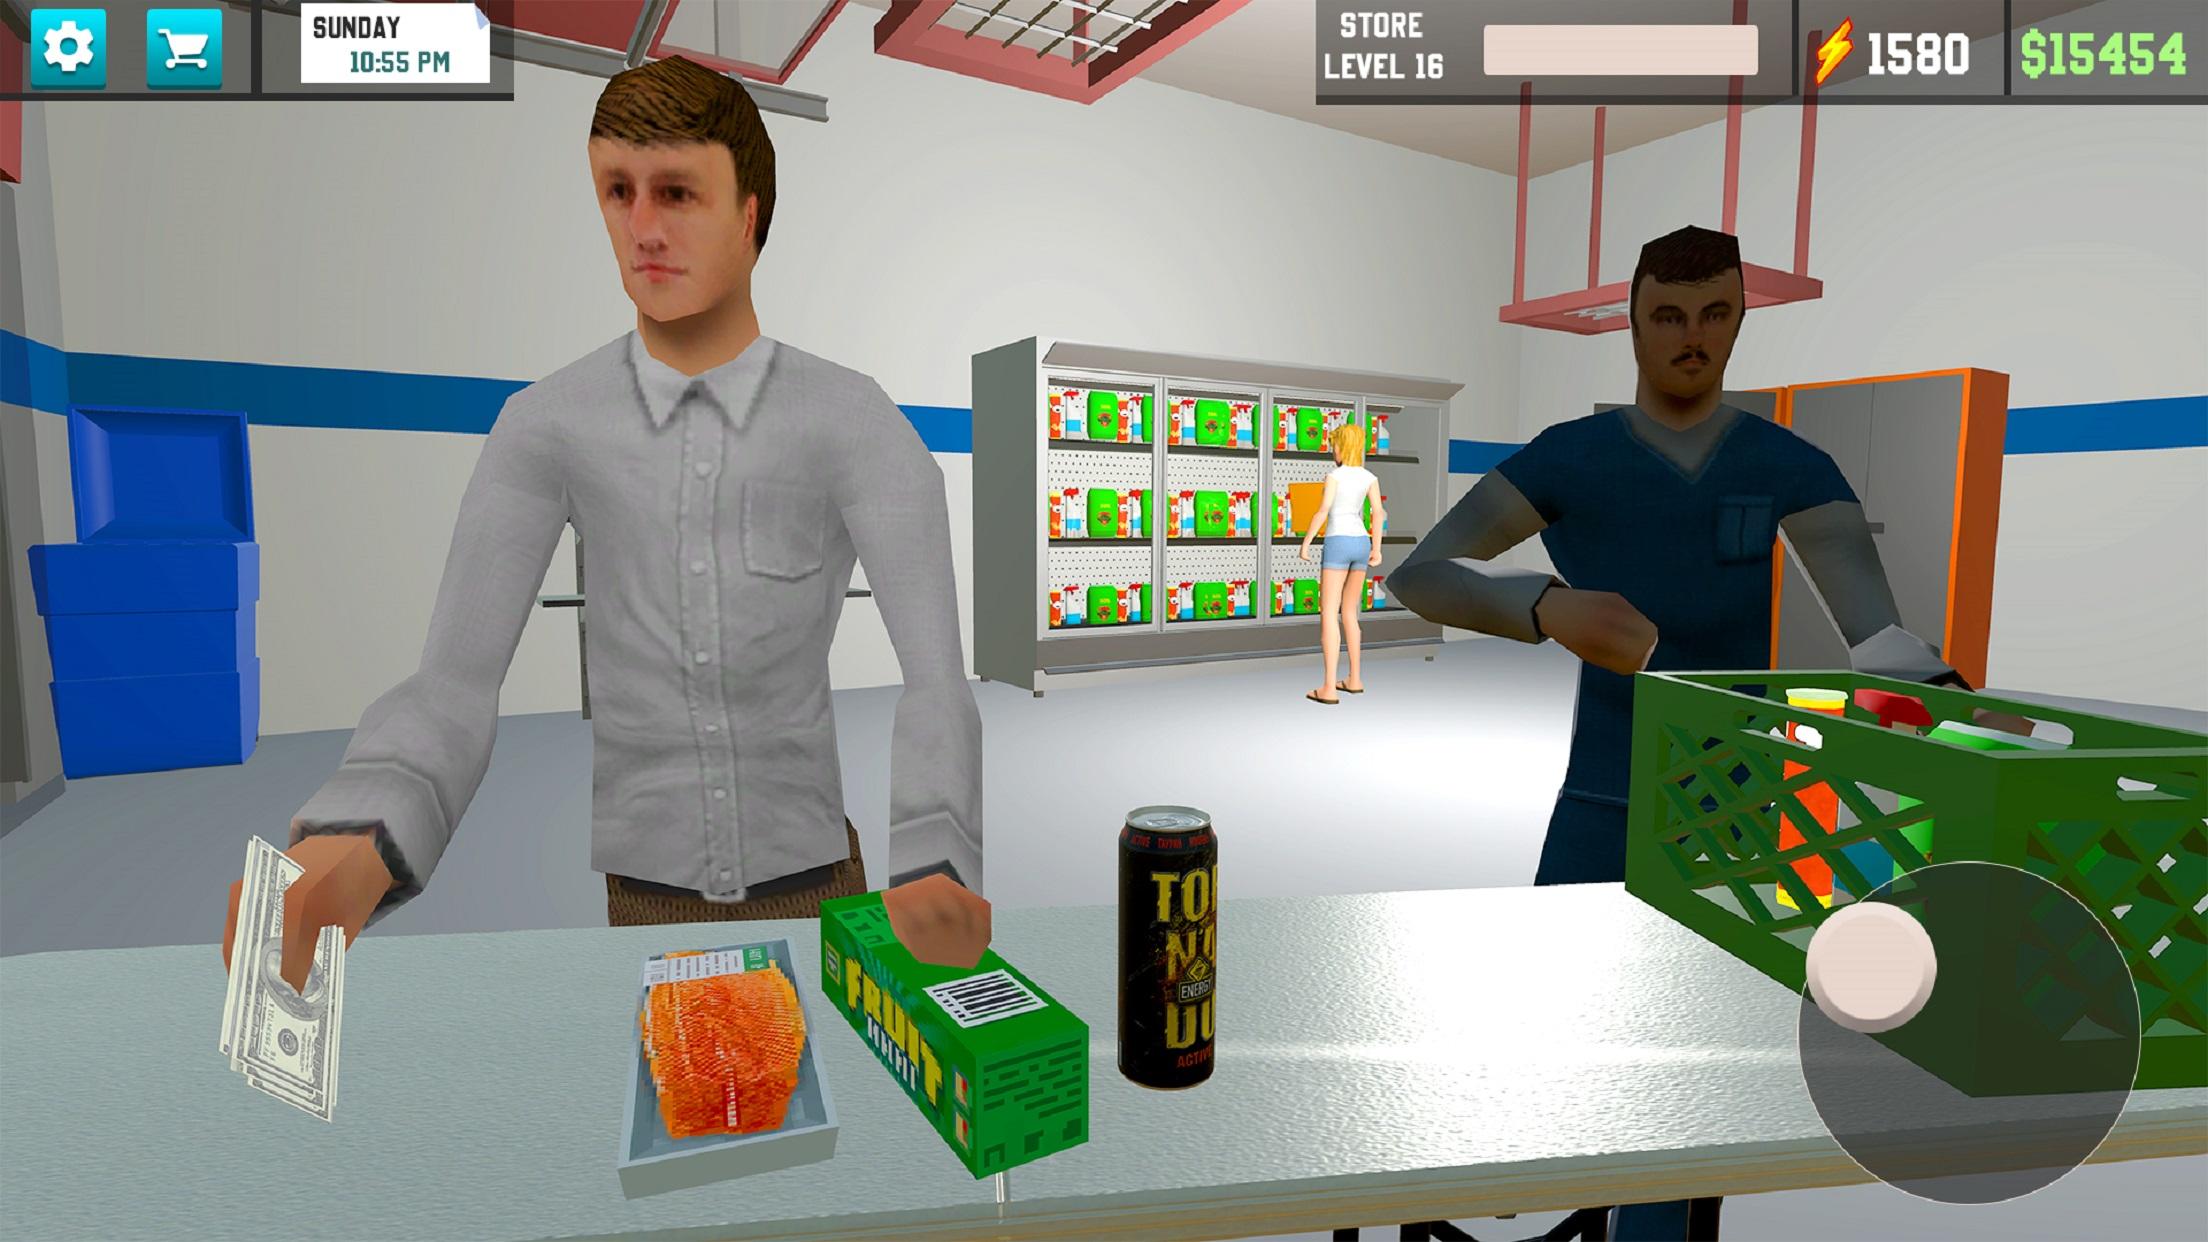 Screenshot 1 of Simulador tienda supermercado 0.4